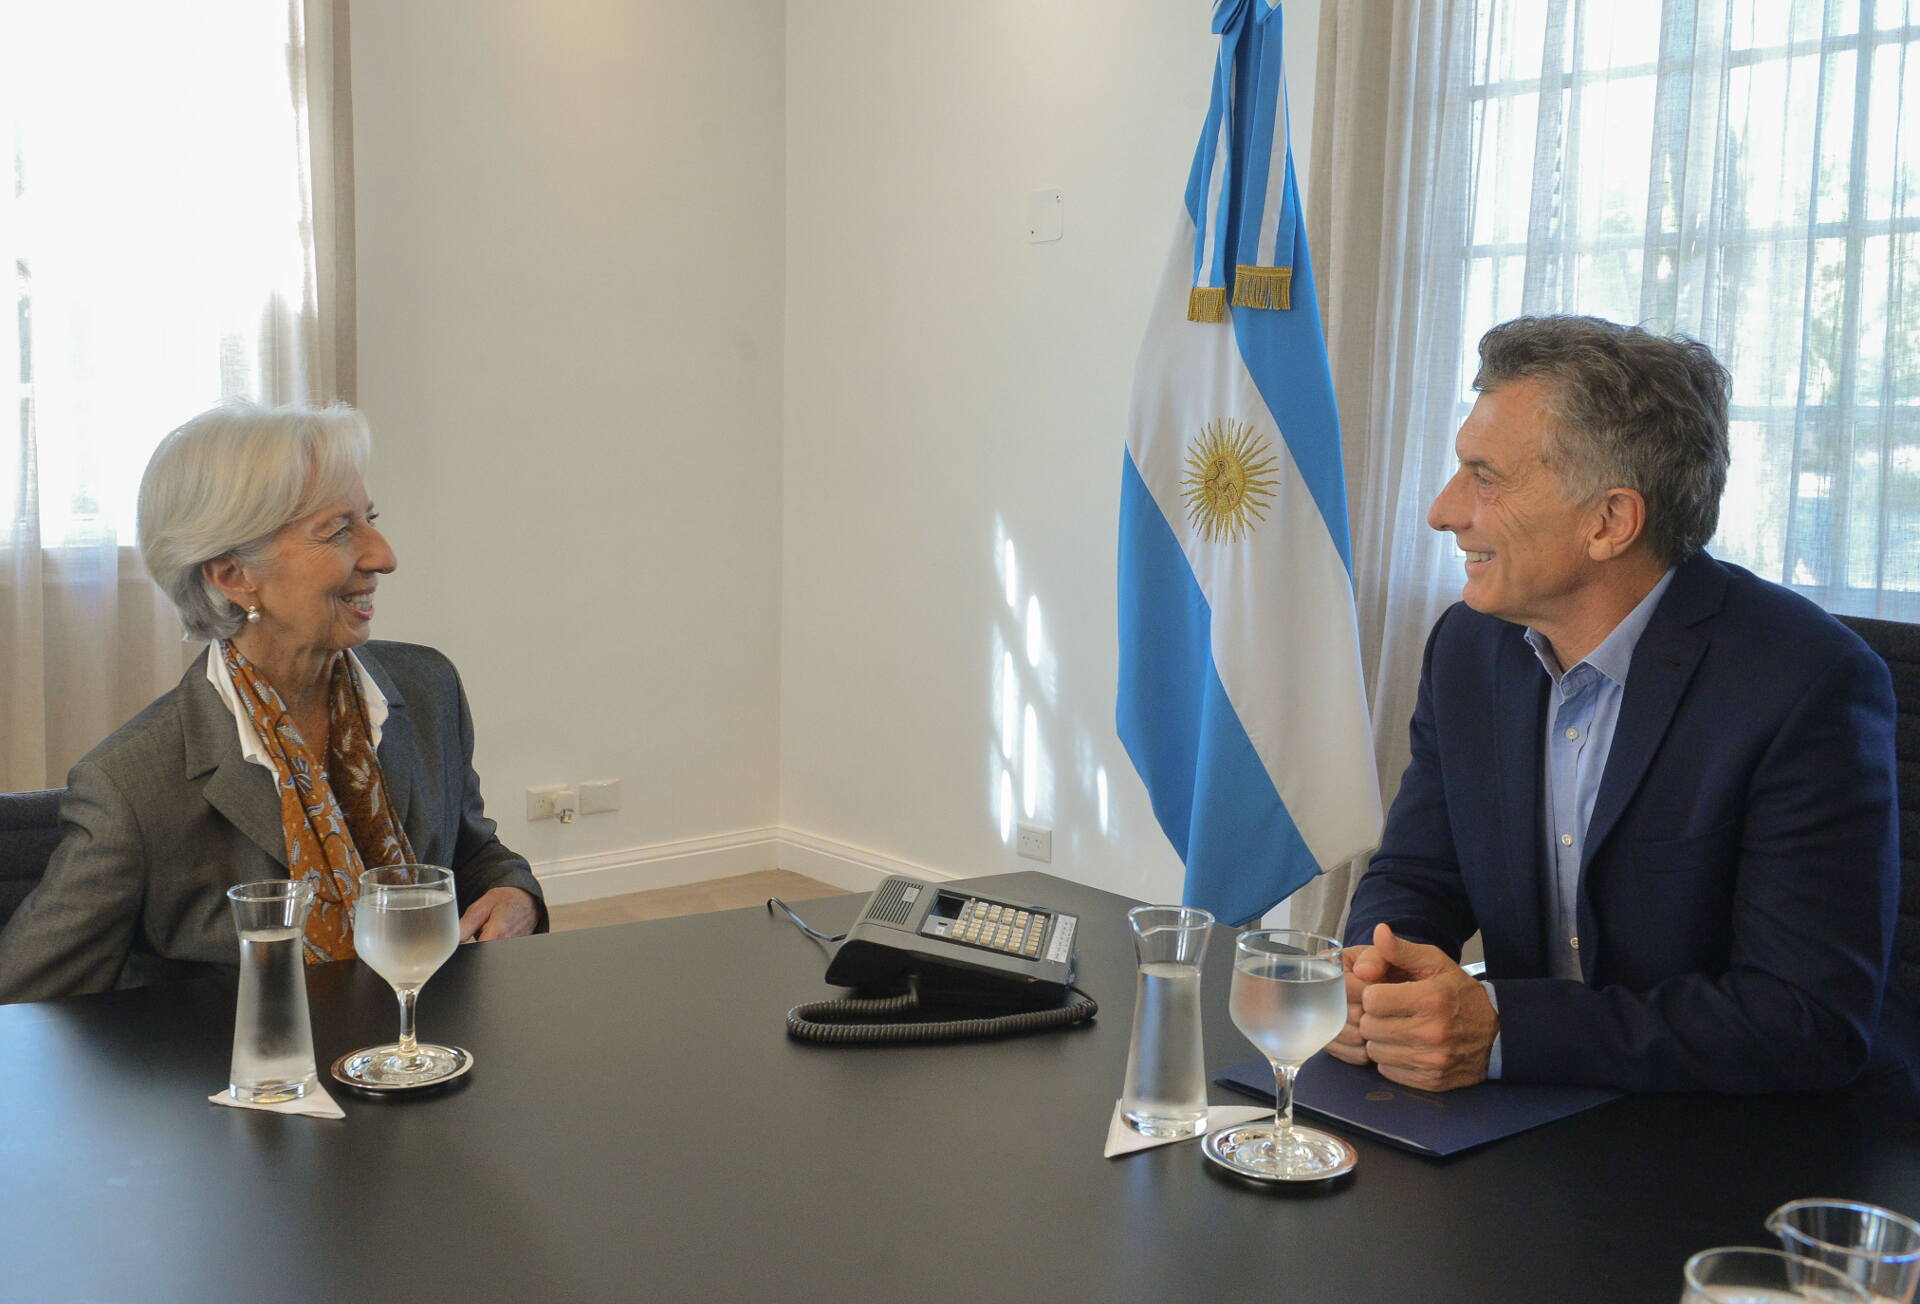 El presidente Macri recibió a la directora del FMI, Christine Lagarde